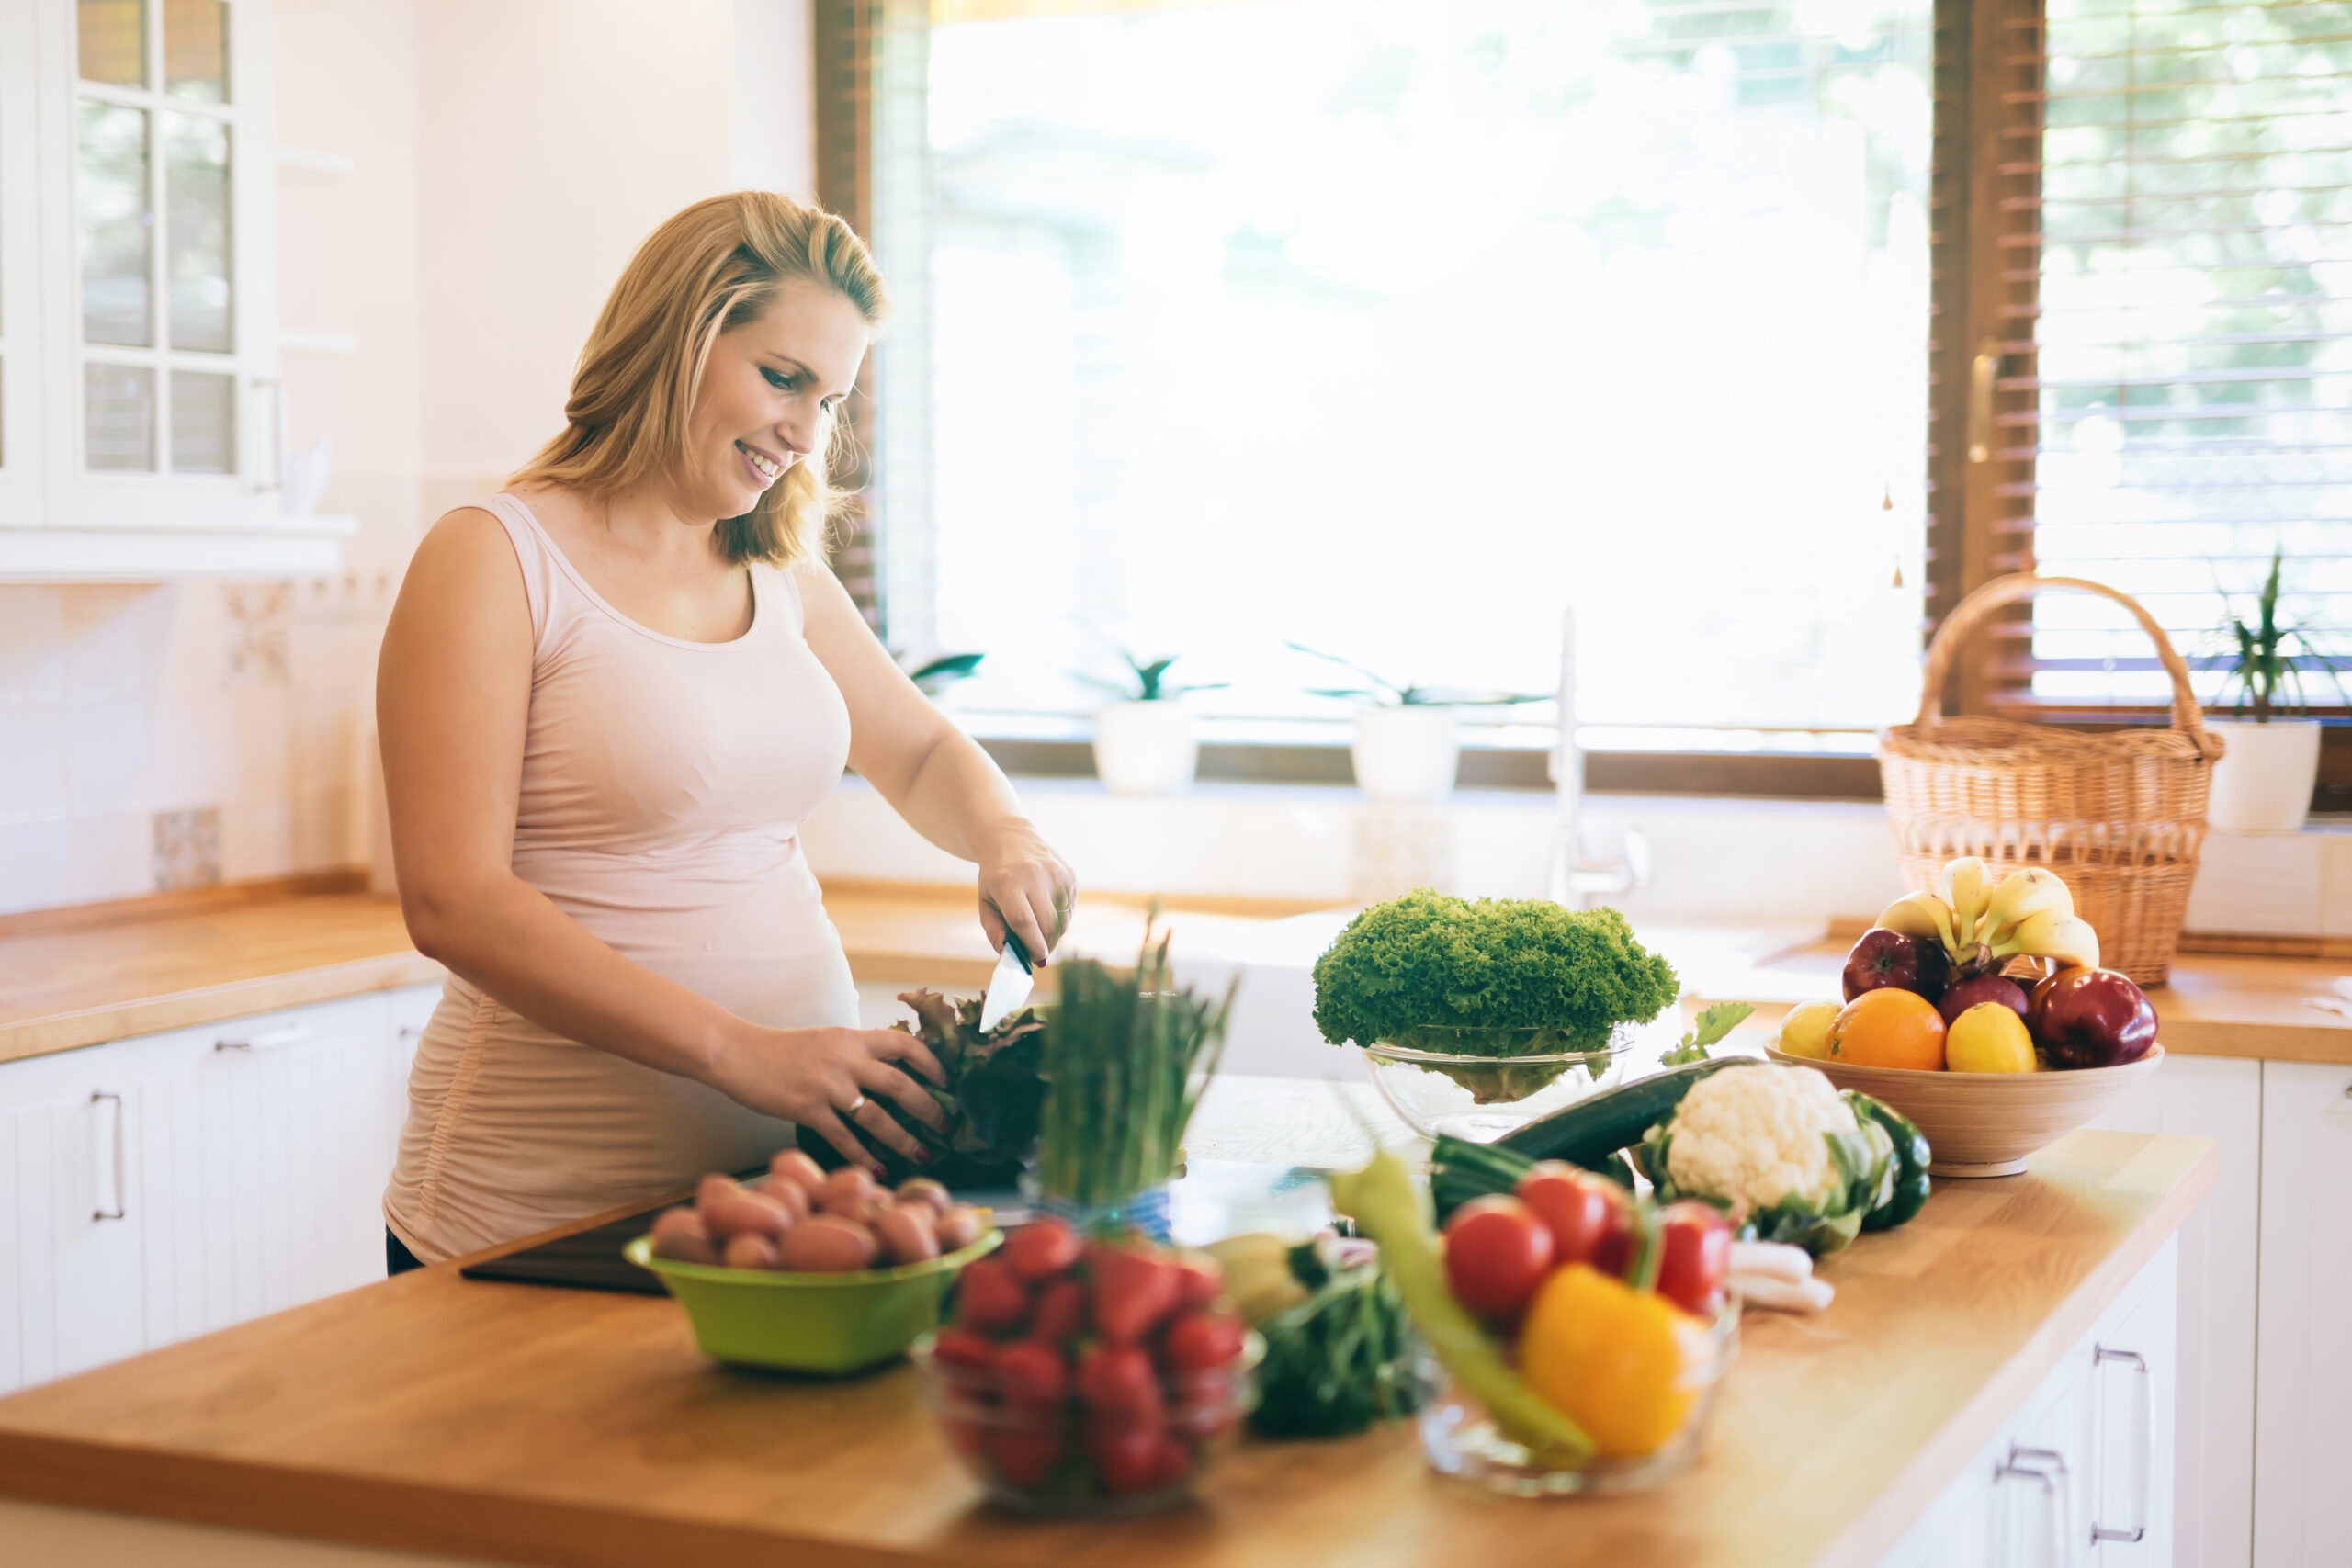 Pregnant woman preparing a meal